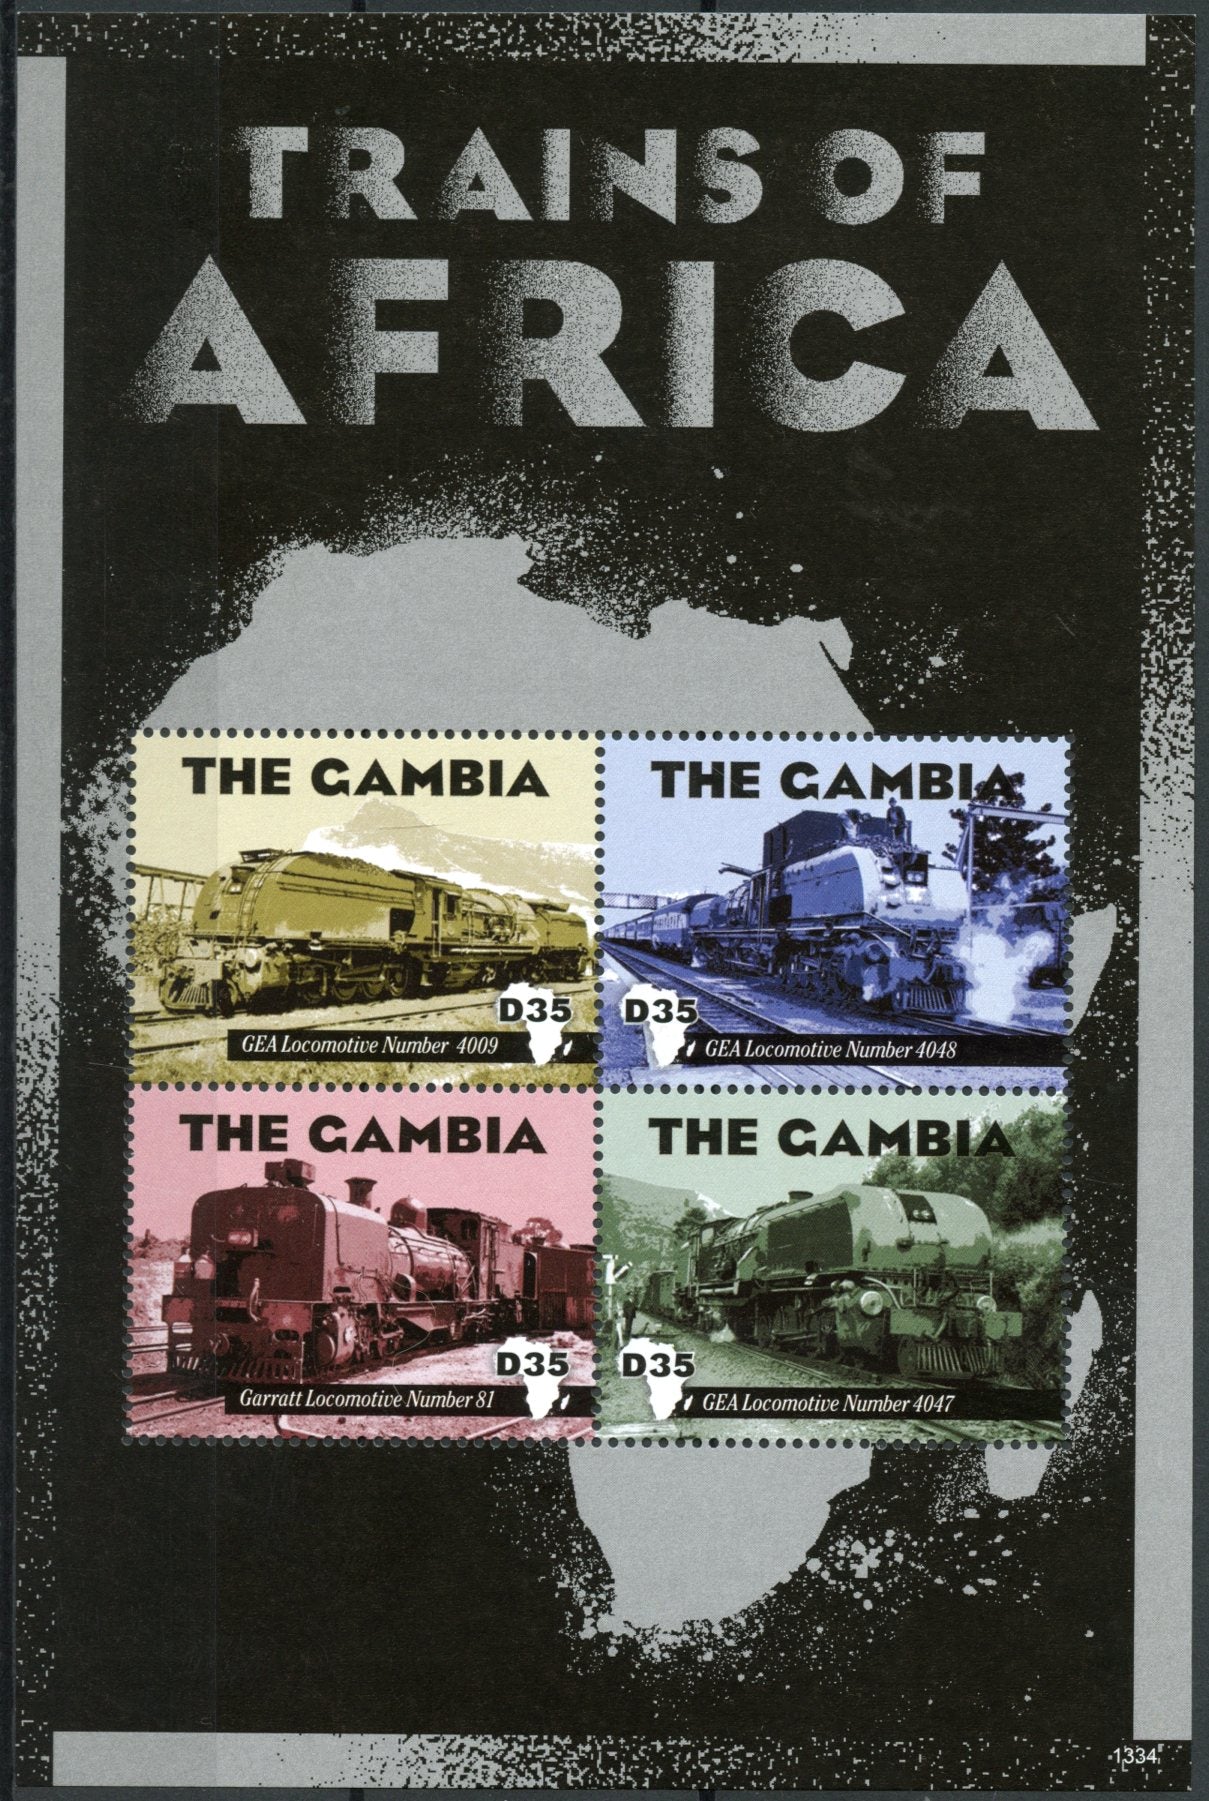 Gambia 2013 MNH Railways Stamps Trains of Africa GEA Locomotive Garratt 4v M/S